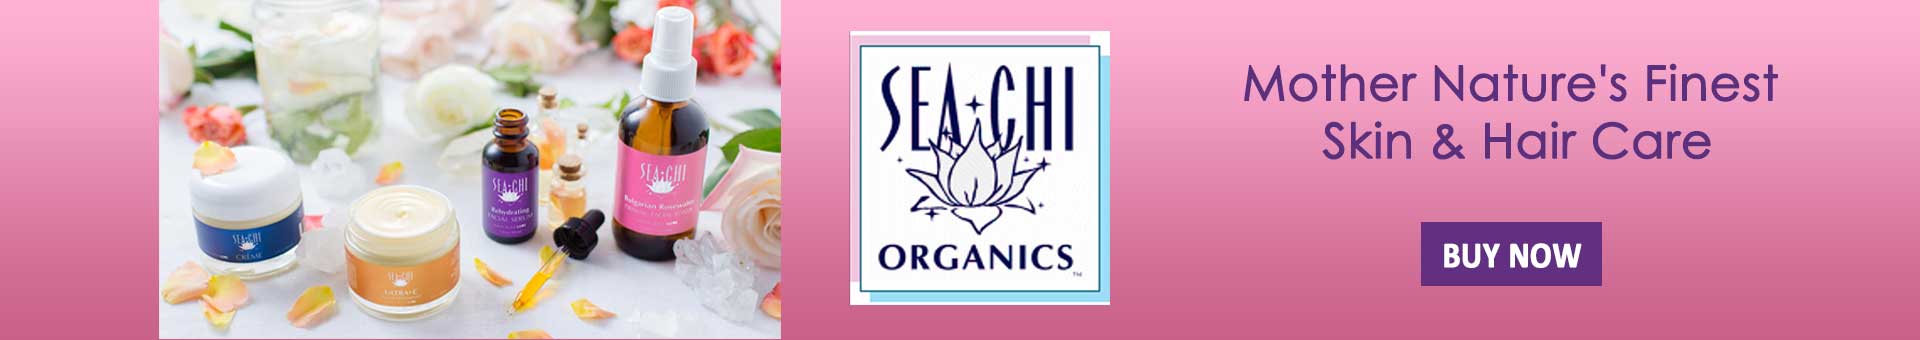 Sea Chi Organics